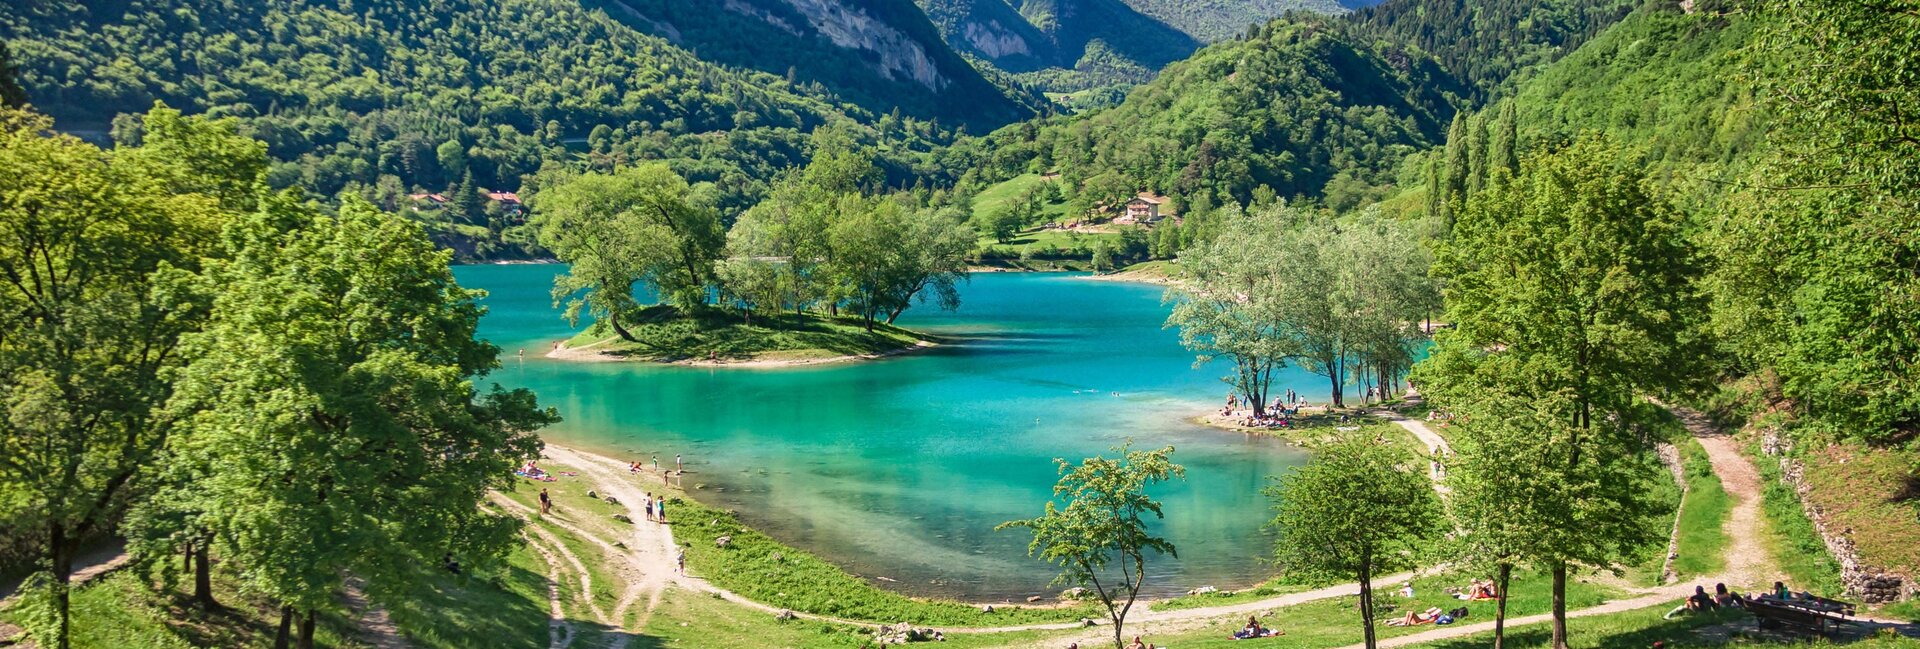 Jezioro Tenno, trekking